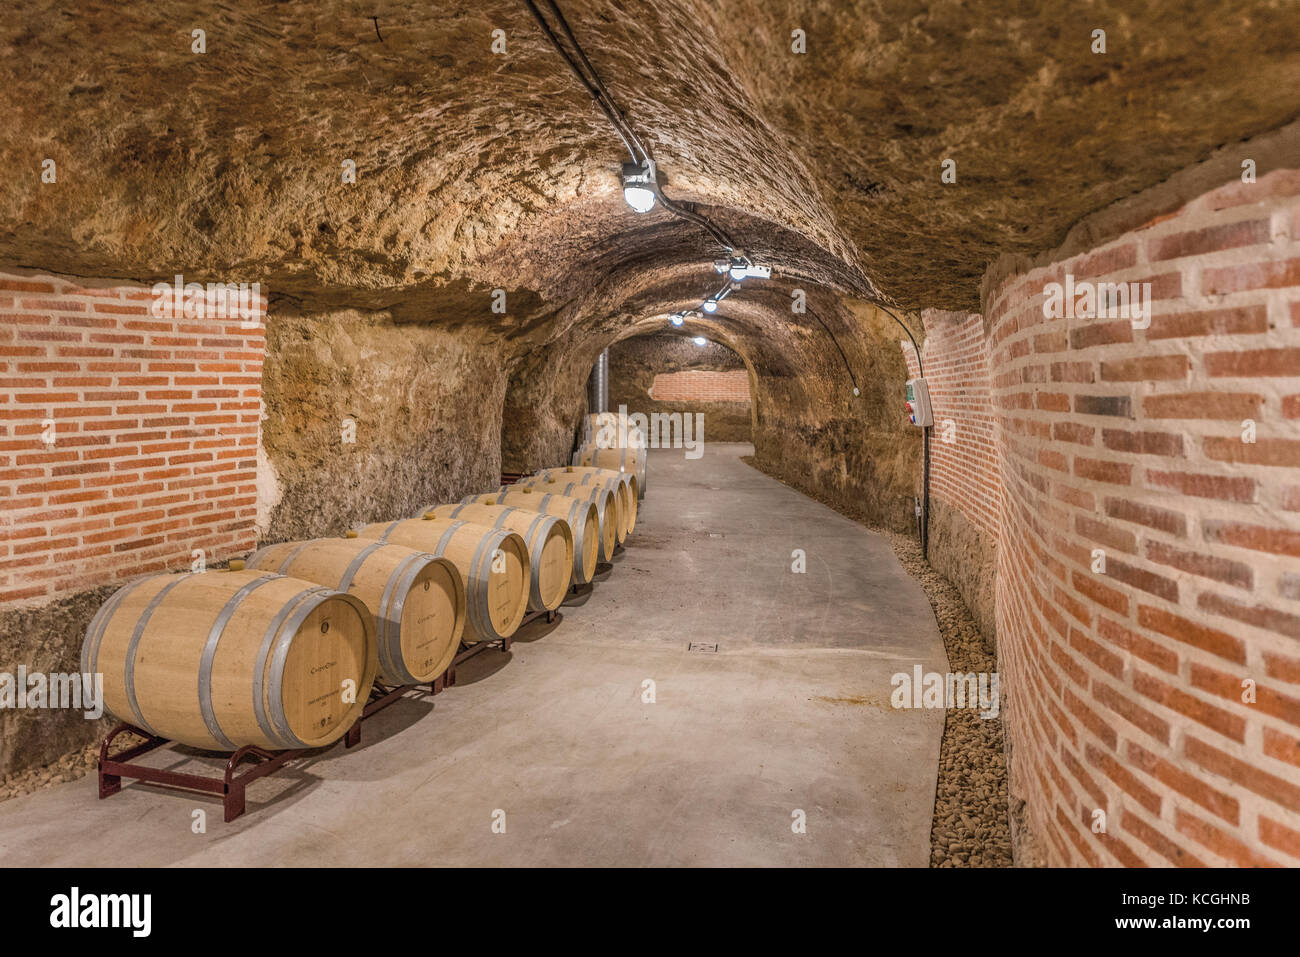 underground cellars of Rueda, Spain Stock Photo